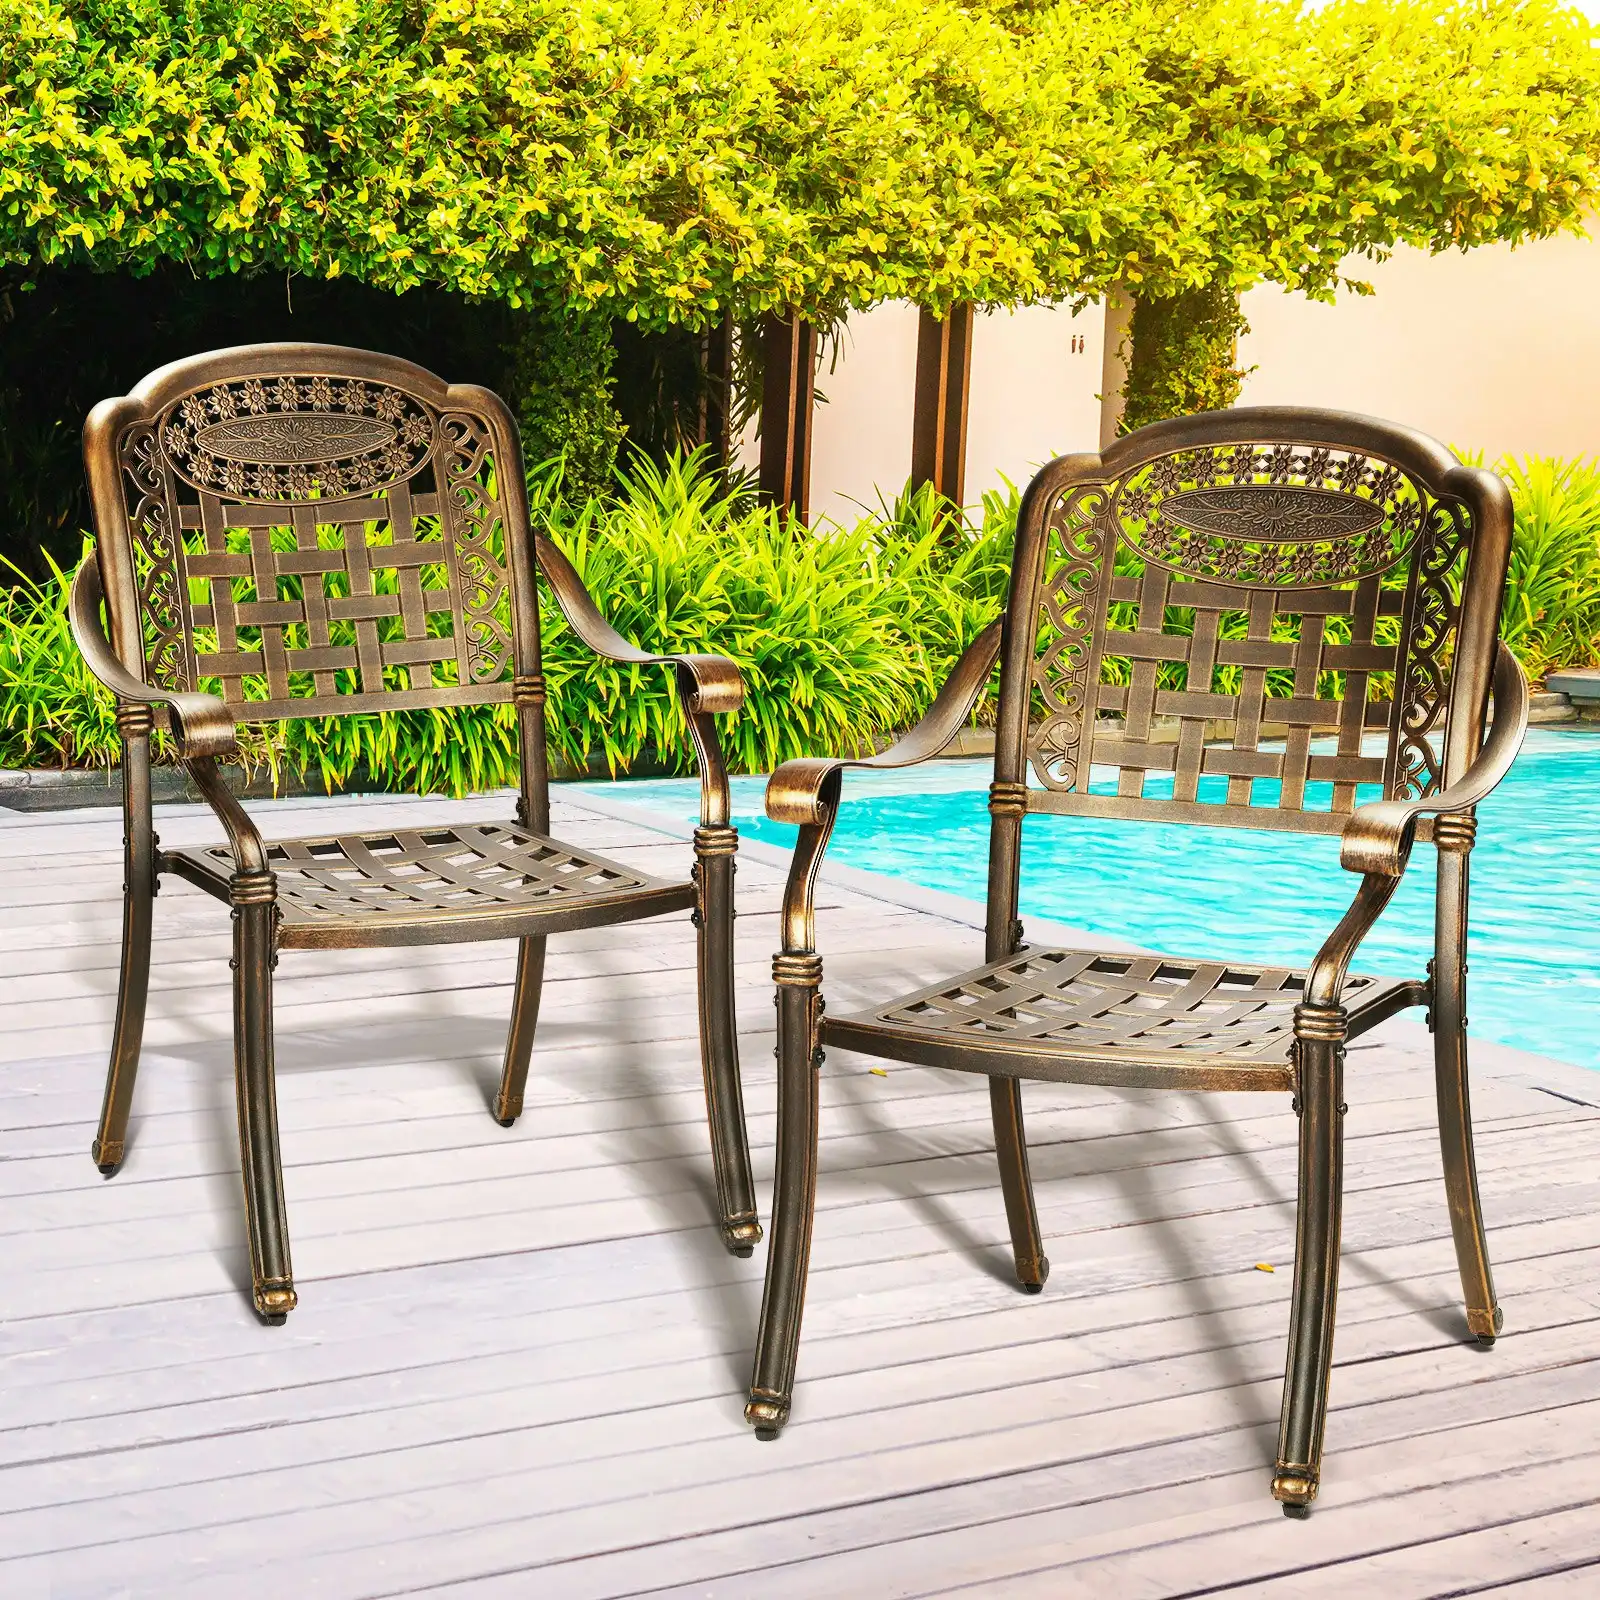 Livsip Outdoor Furniture Dining Chairs Cast Aluminium Garden Patio Chairs x2